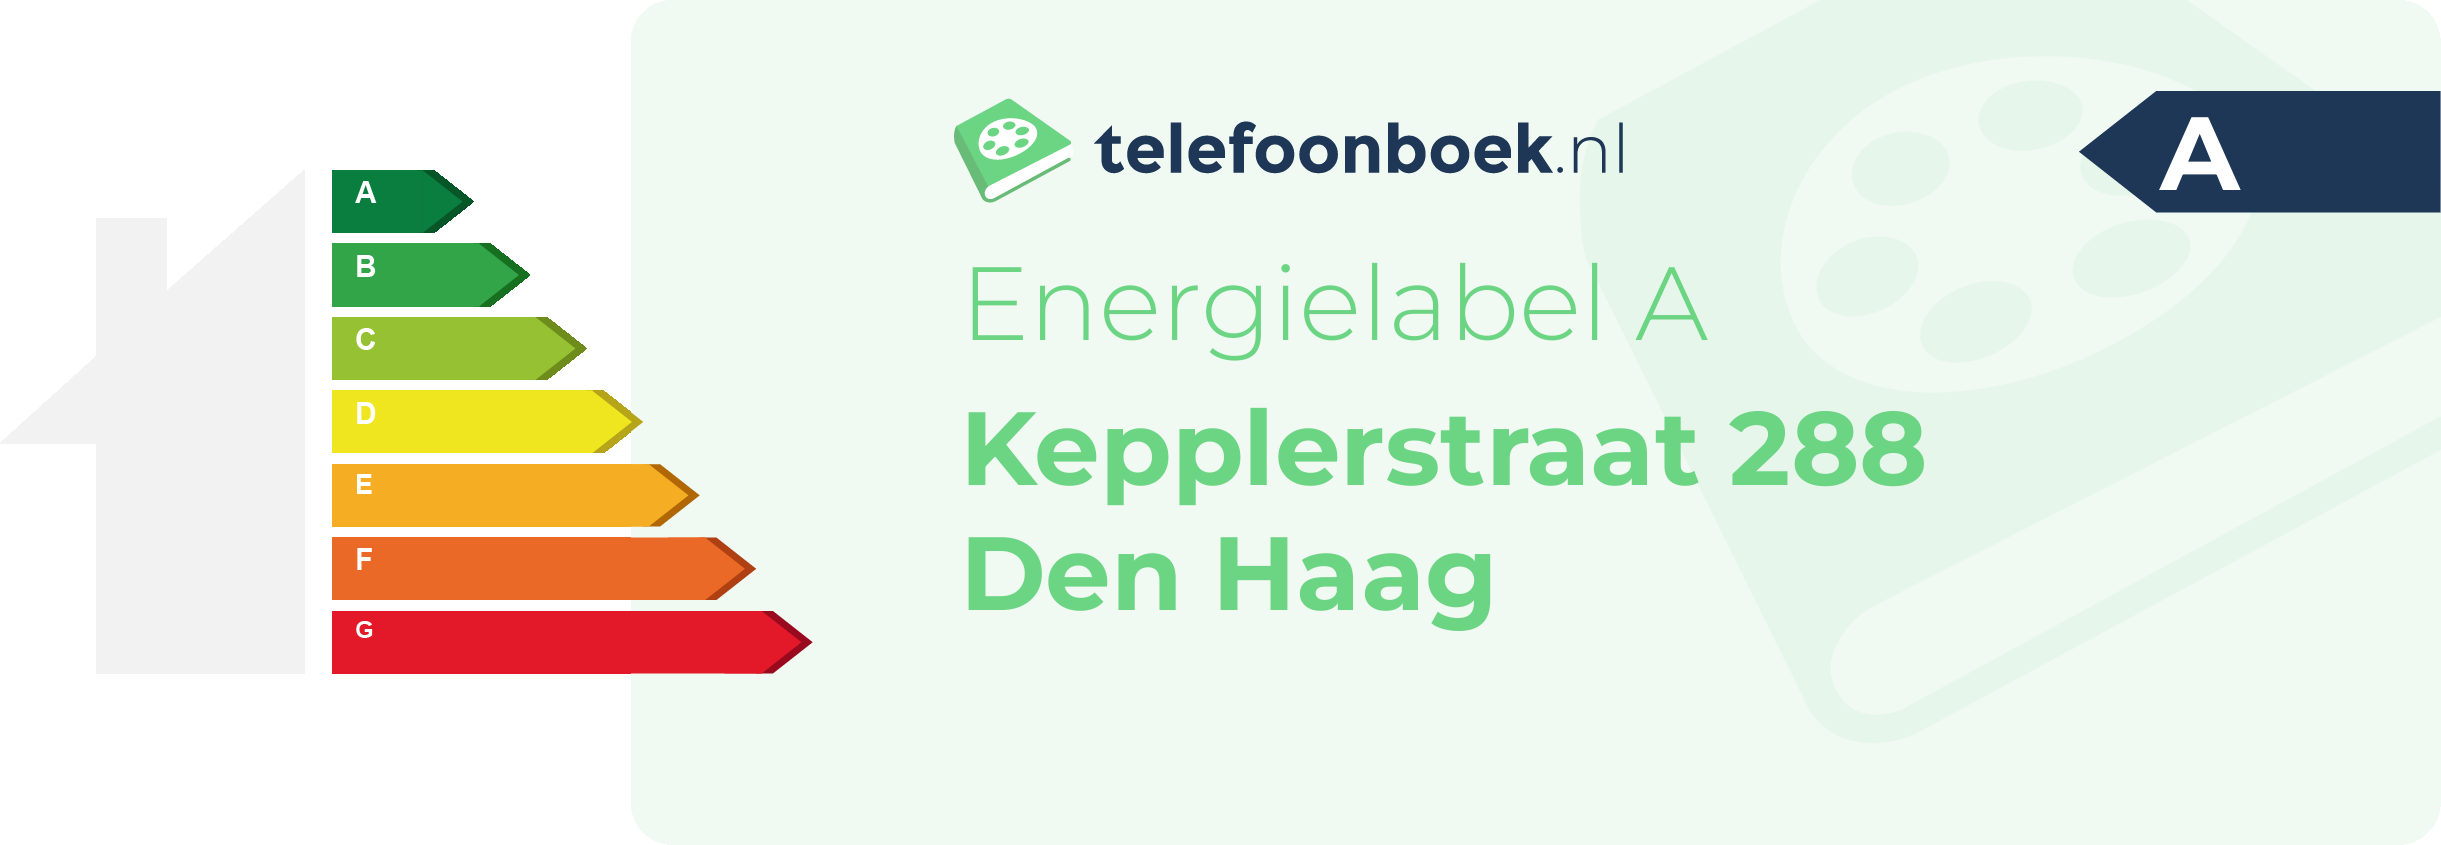 Energielabel Kepplerstraat 288 Den Haag